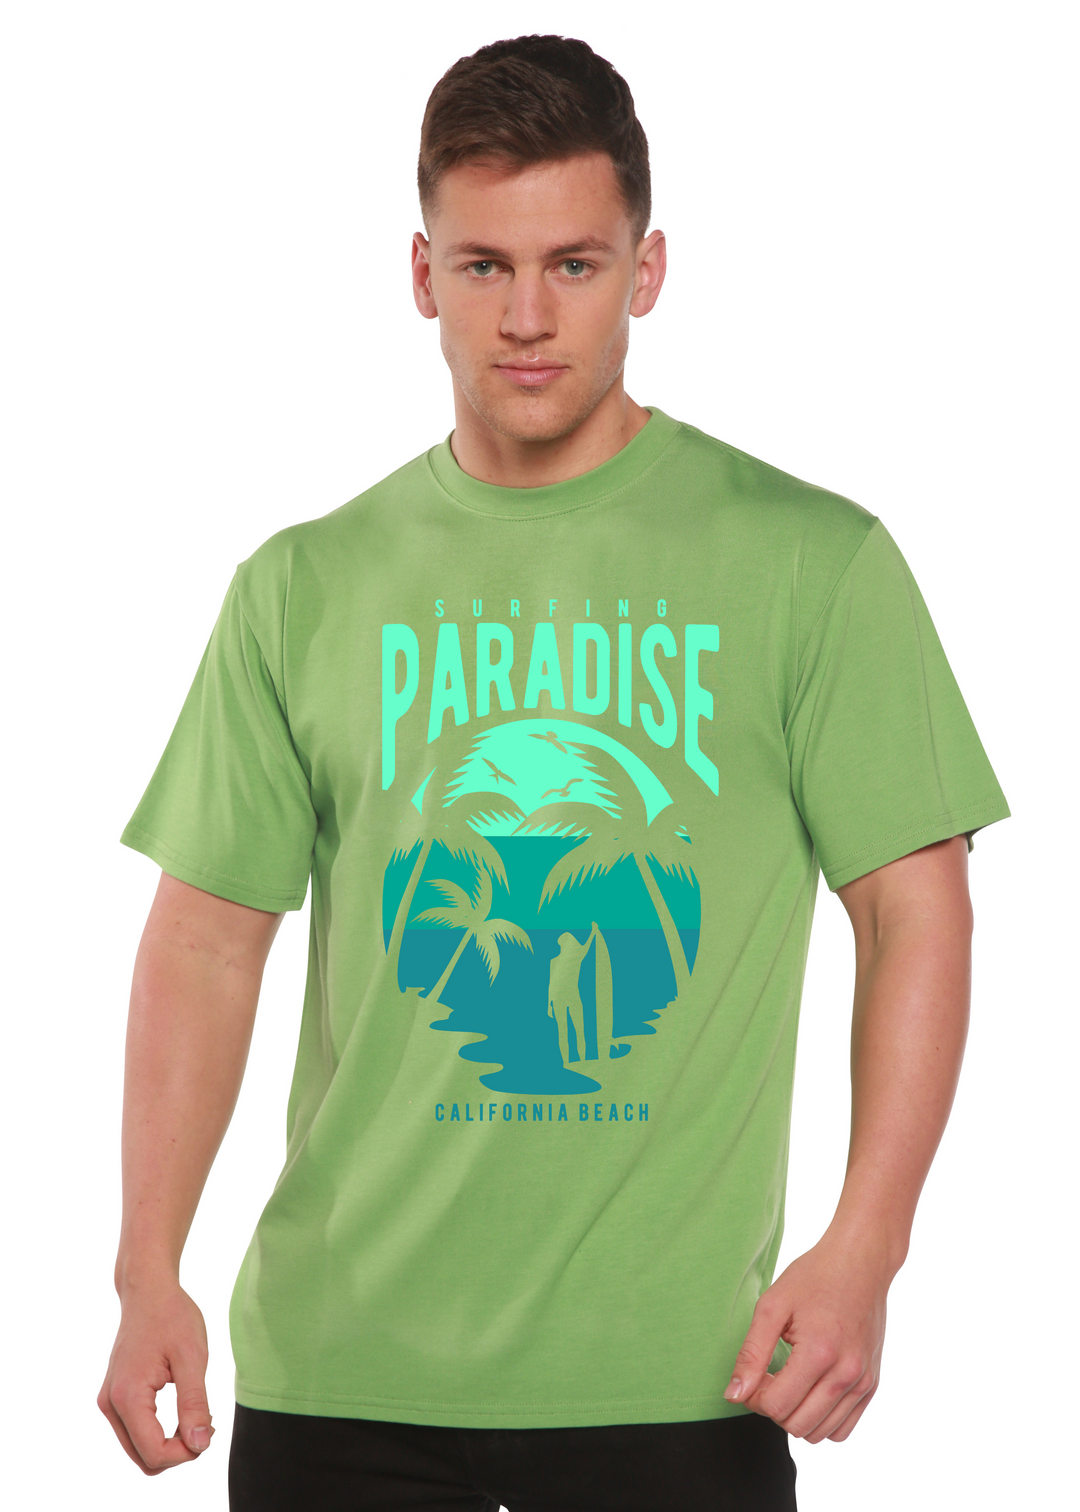 Surfing Paradise California men's bamboo tshirt green tea